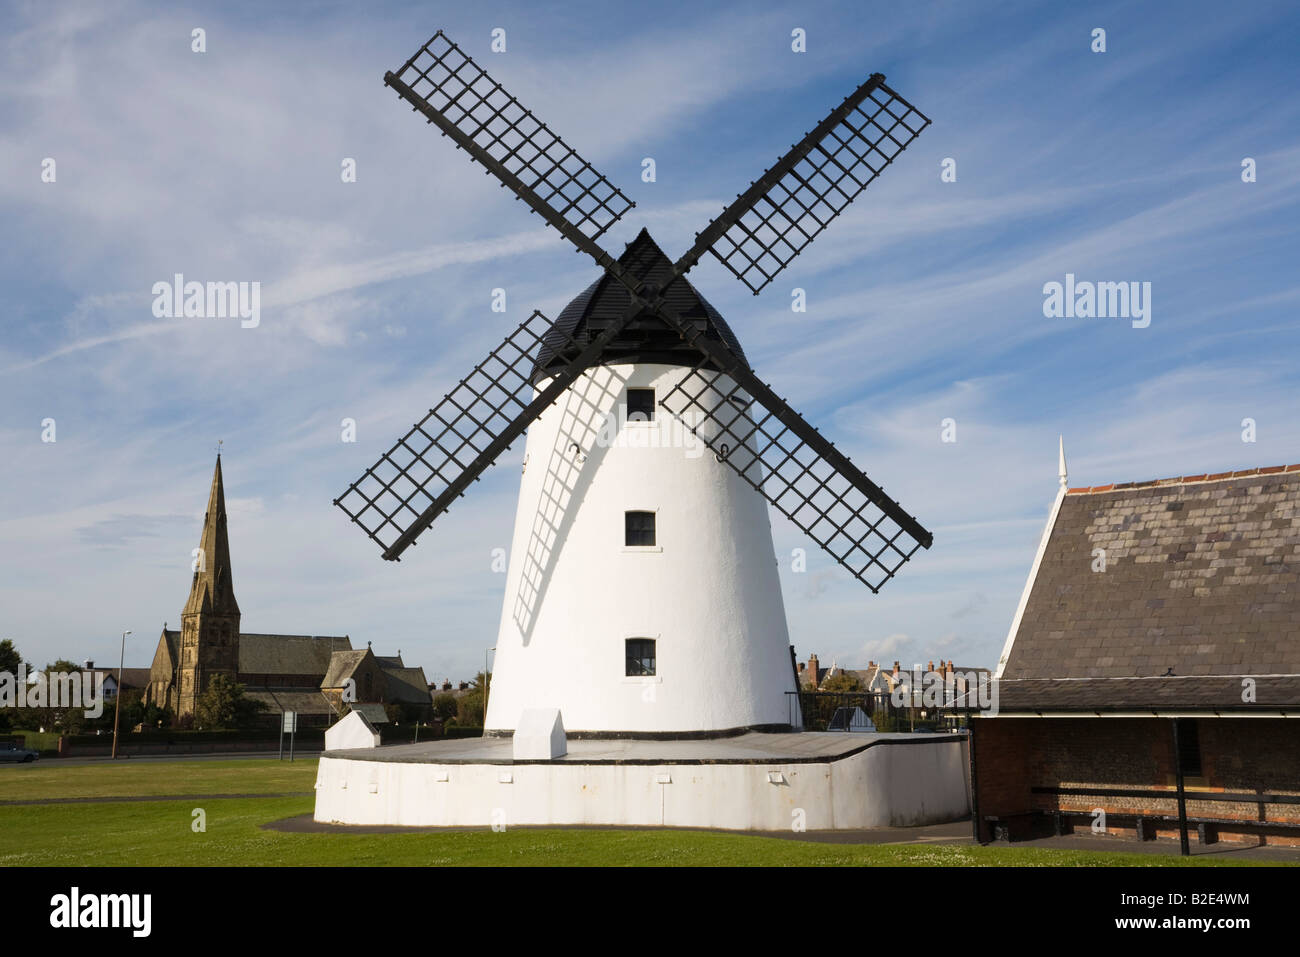 Lytham St Annes Lancashire England UK Restored 19th century Lytham windmill on The Green Stock Photo